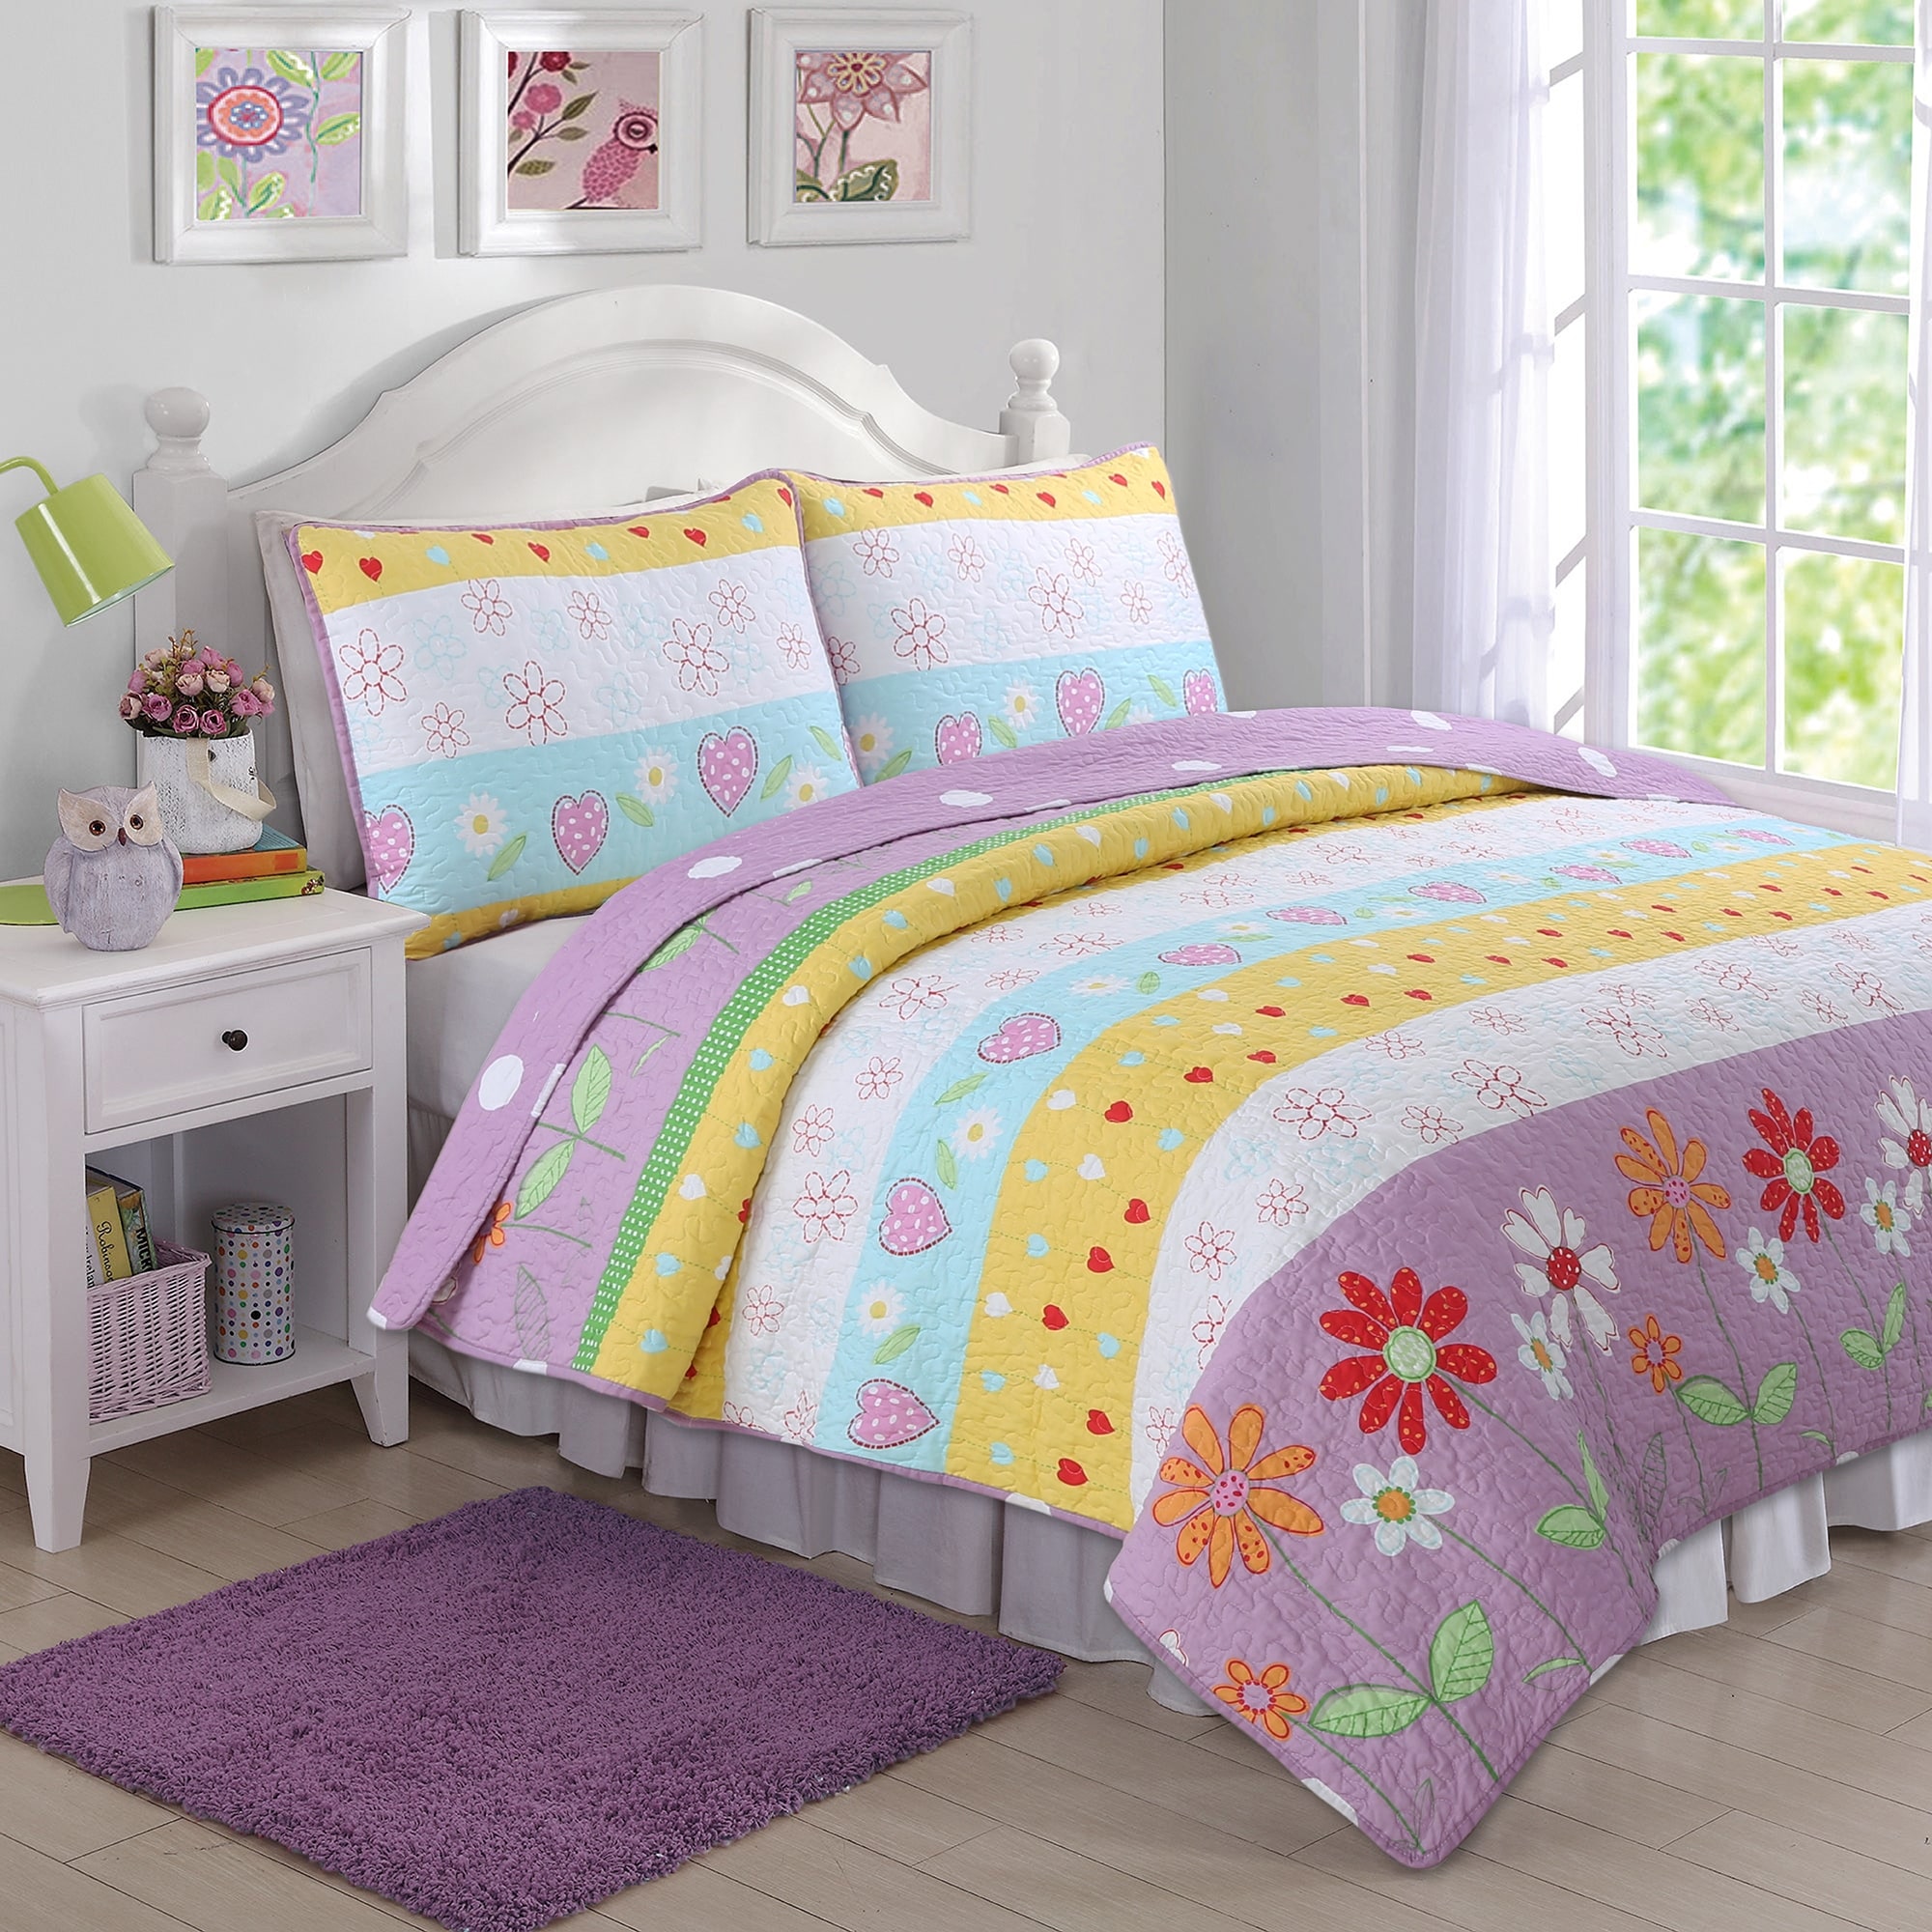 Flor Purple with White Floral Reversible Bedspread Set in a Modern Design 